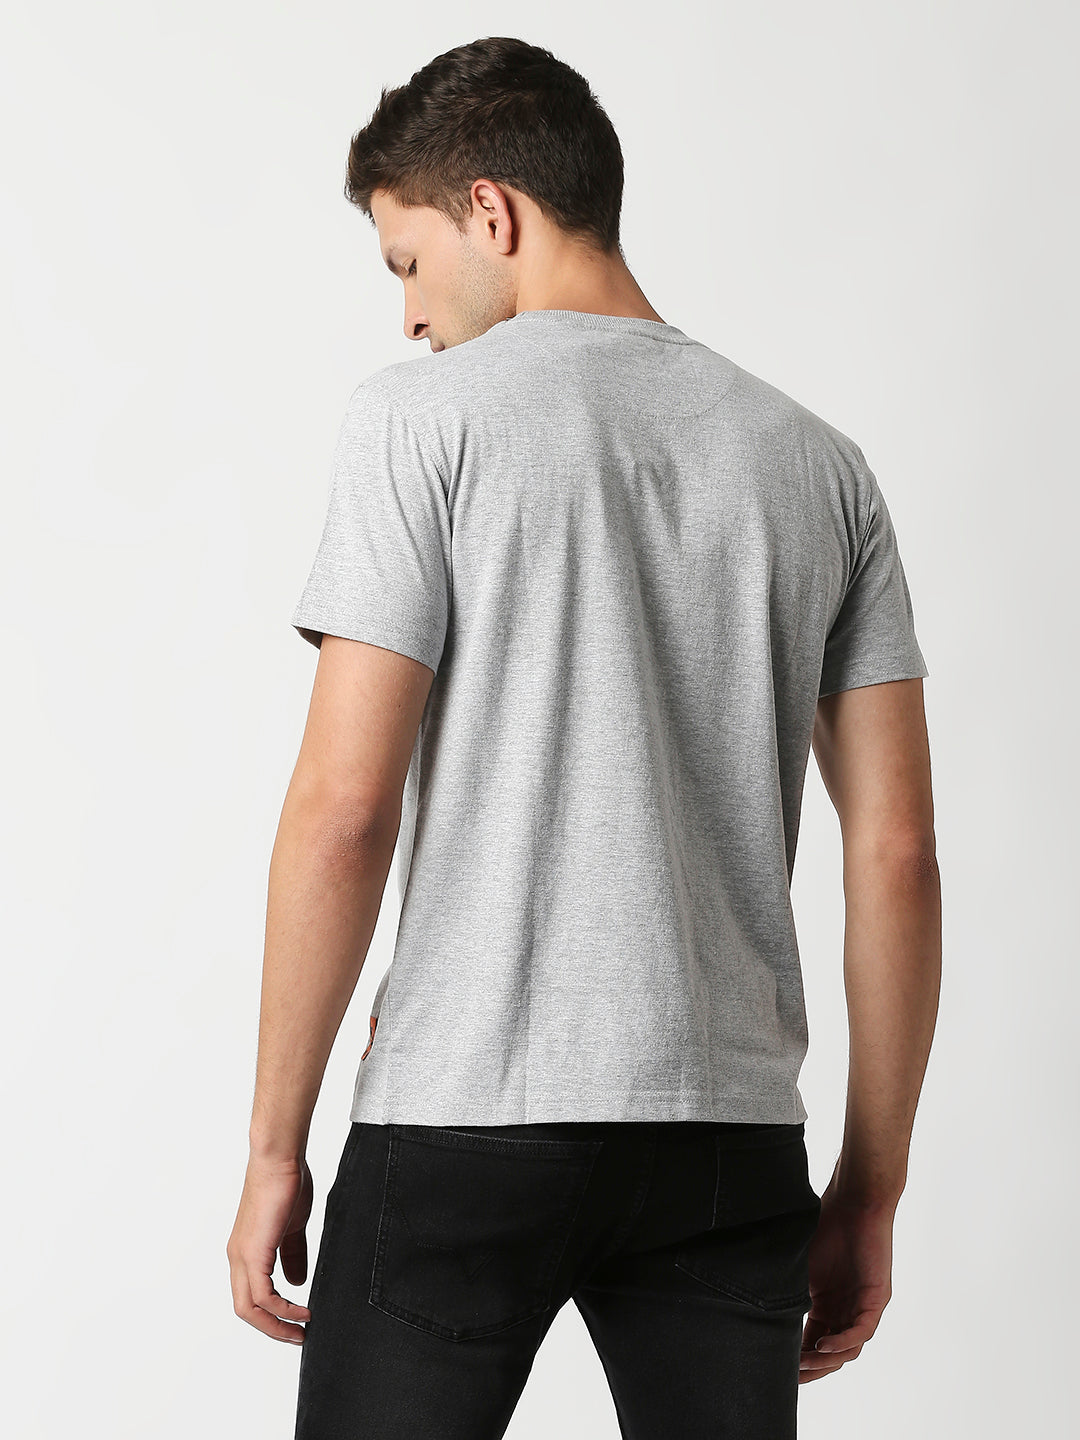 Buy Blamblack Men's Half Sleeves Grey Melange Plain T Shirt